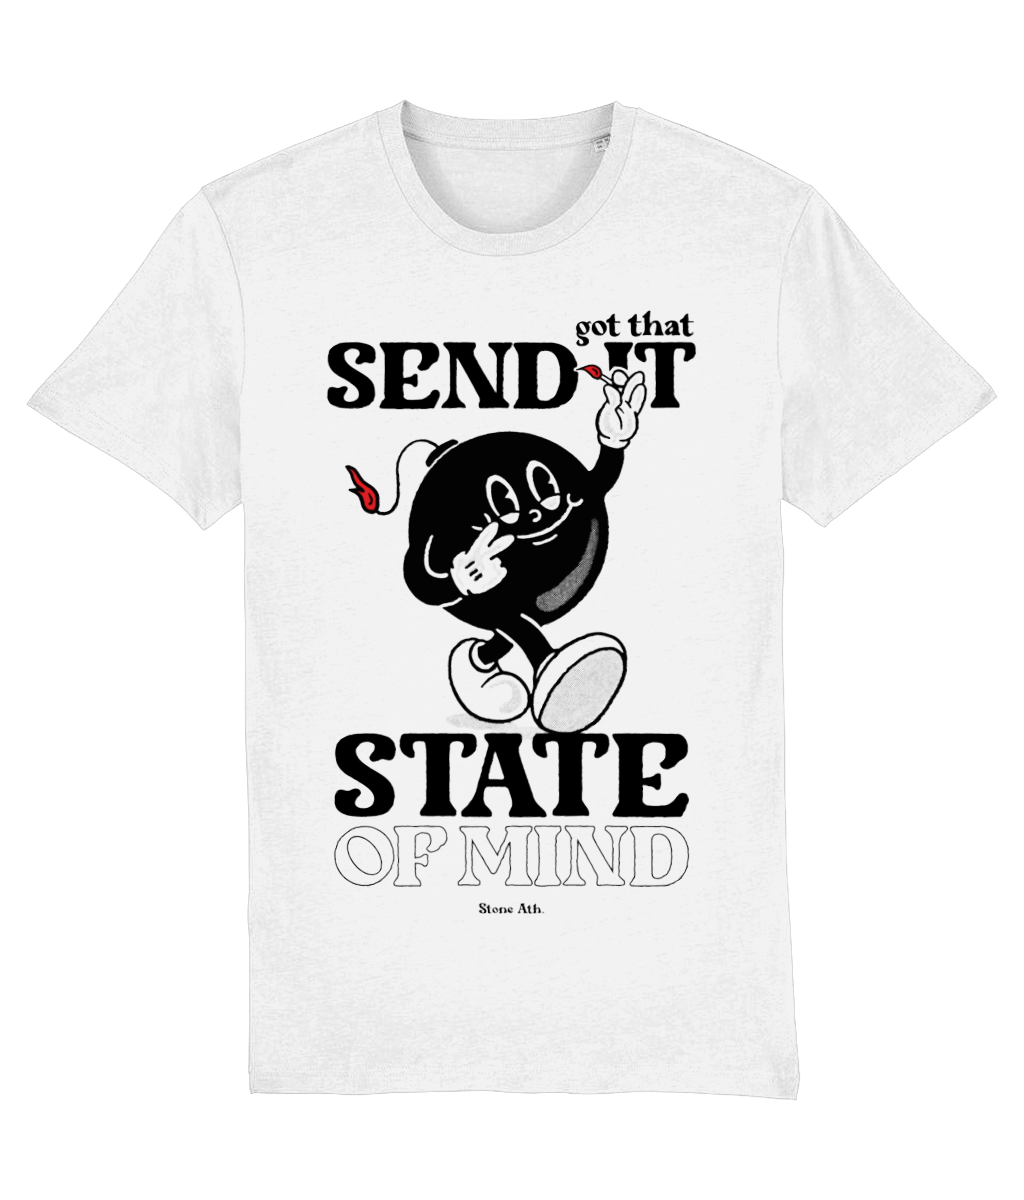 Send it state of mind tee